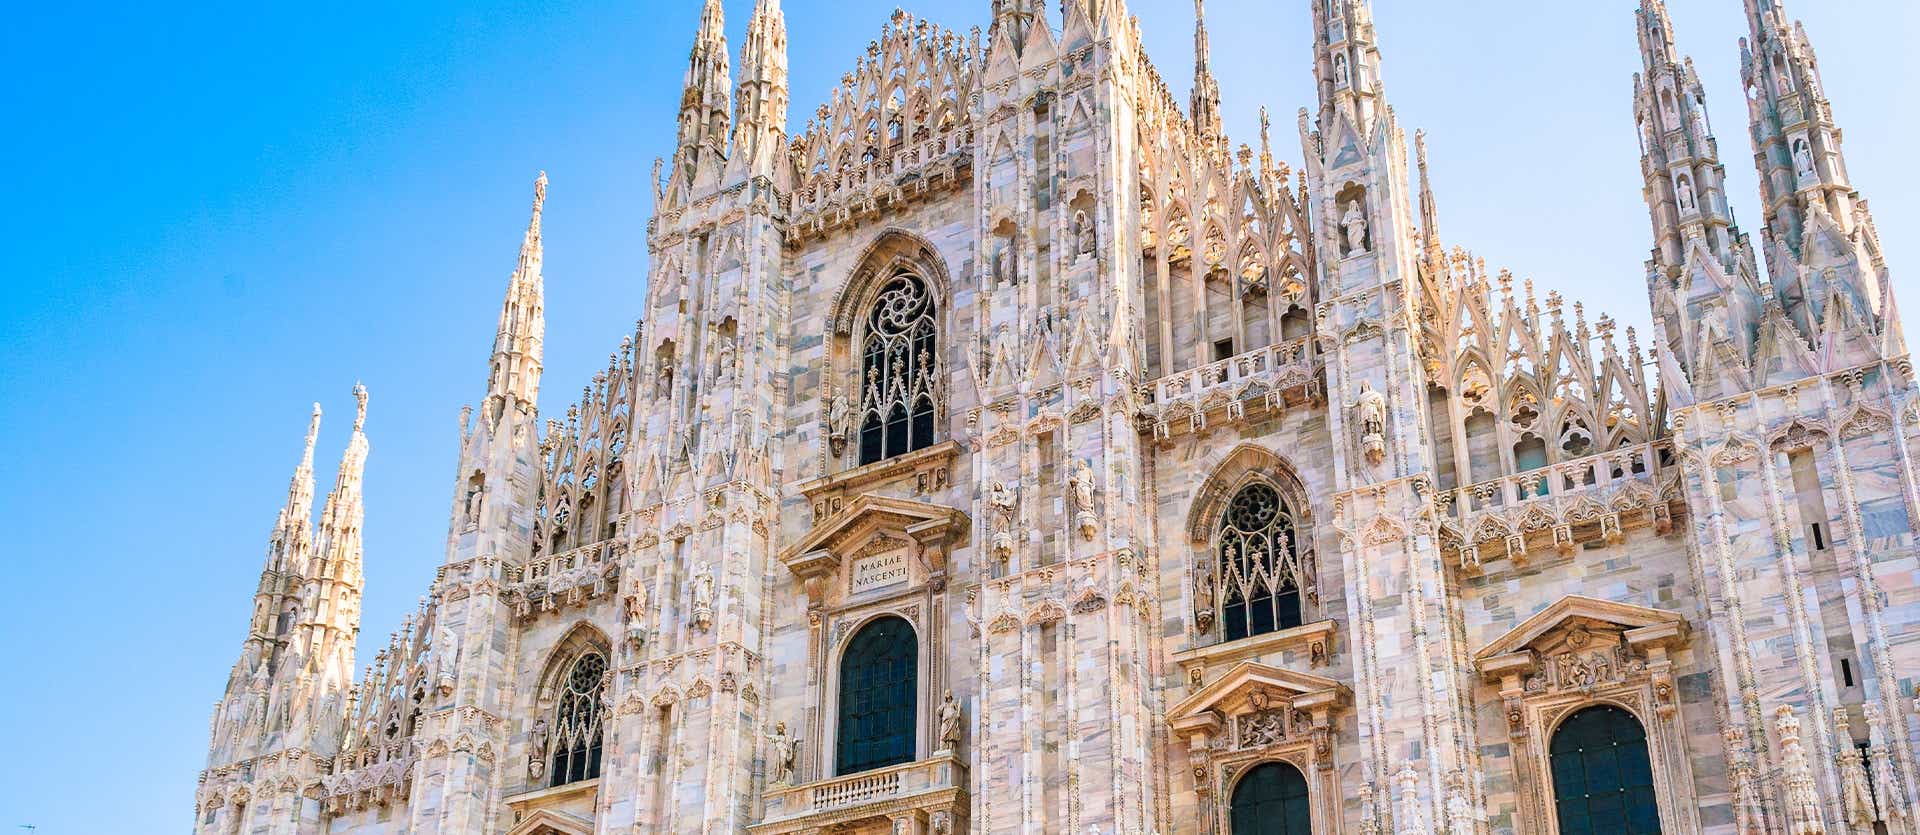 Catedral del Duomo <span class="iconos separador"></span> Milán